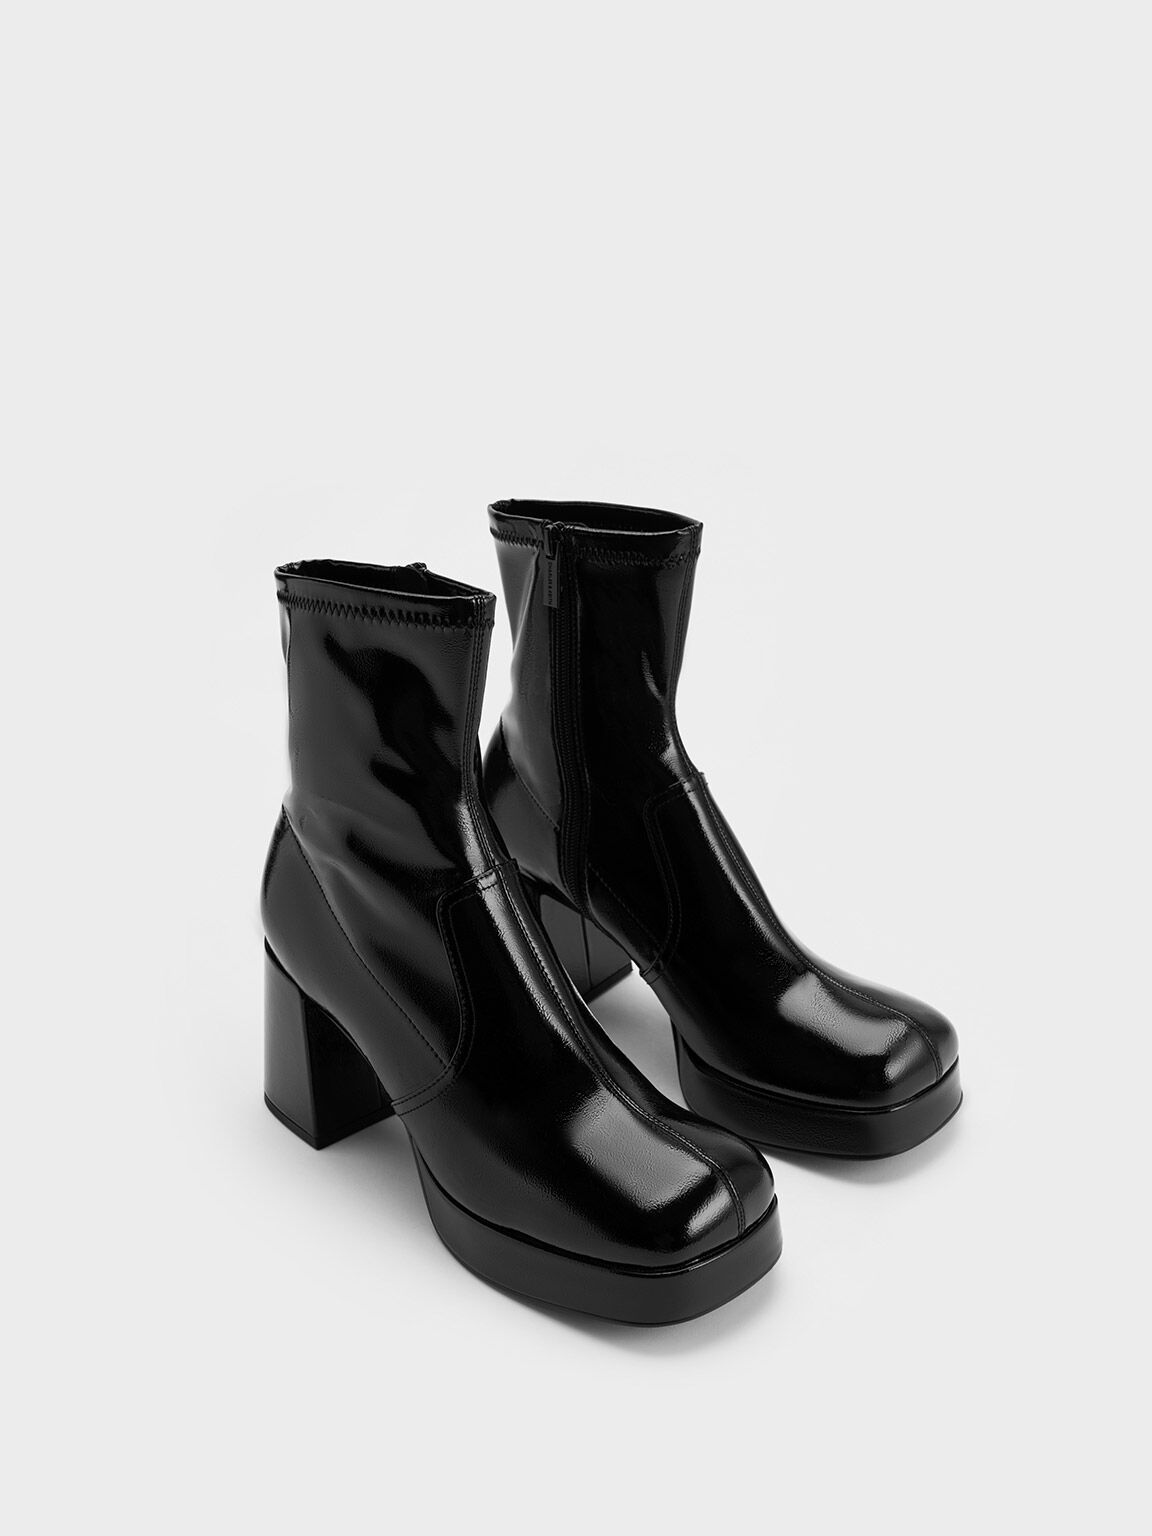 Polished Leather Ankle Booties | Block Heel | Lug Sole